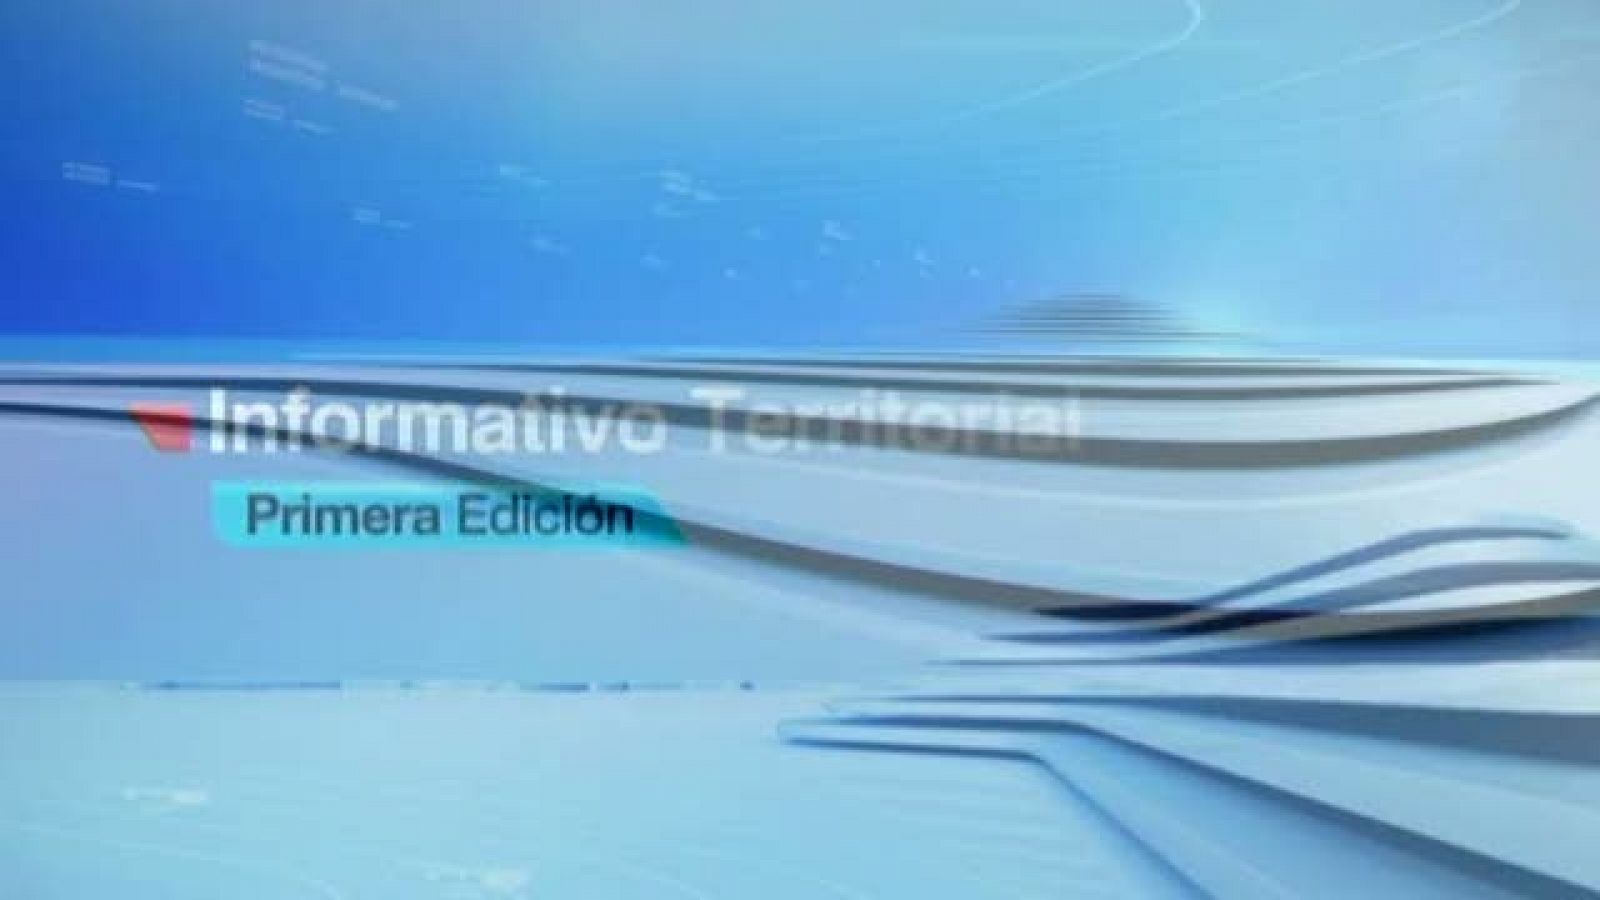 Noticias de Extremadura: Noticias de Extremadura - 09/05/19 | RTVE Play